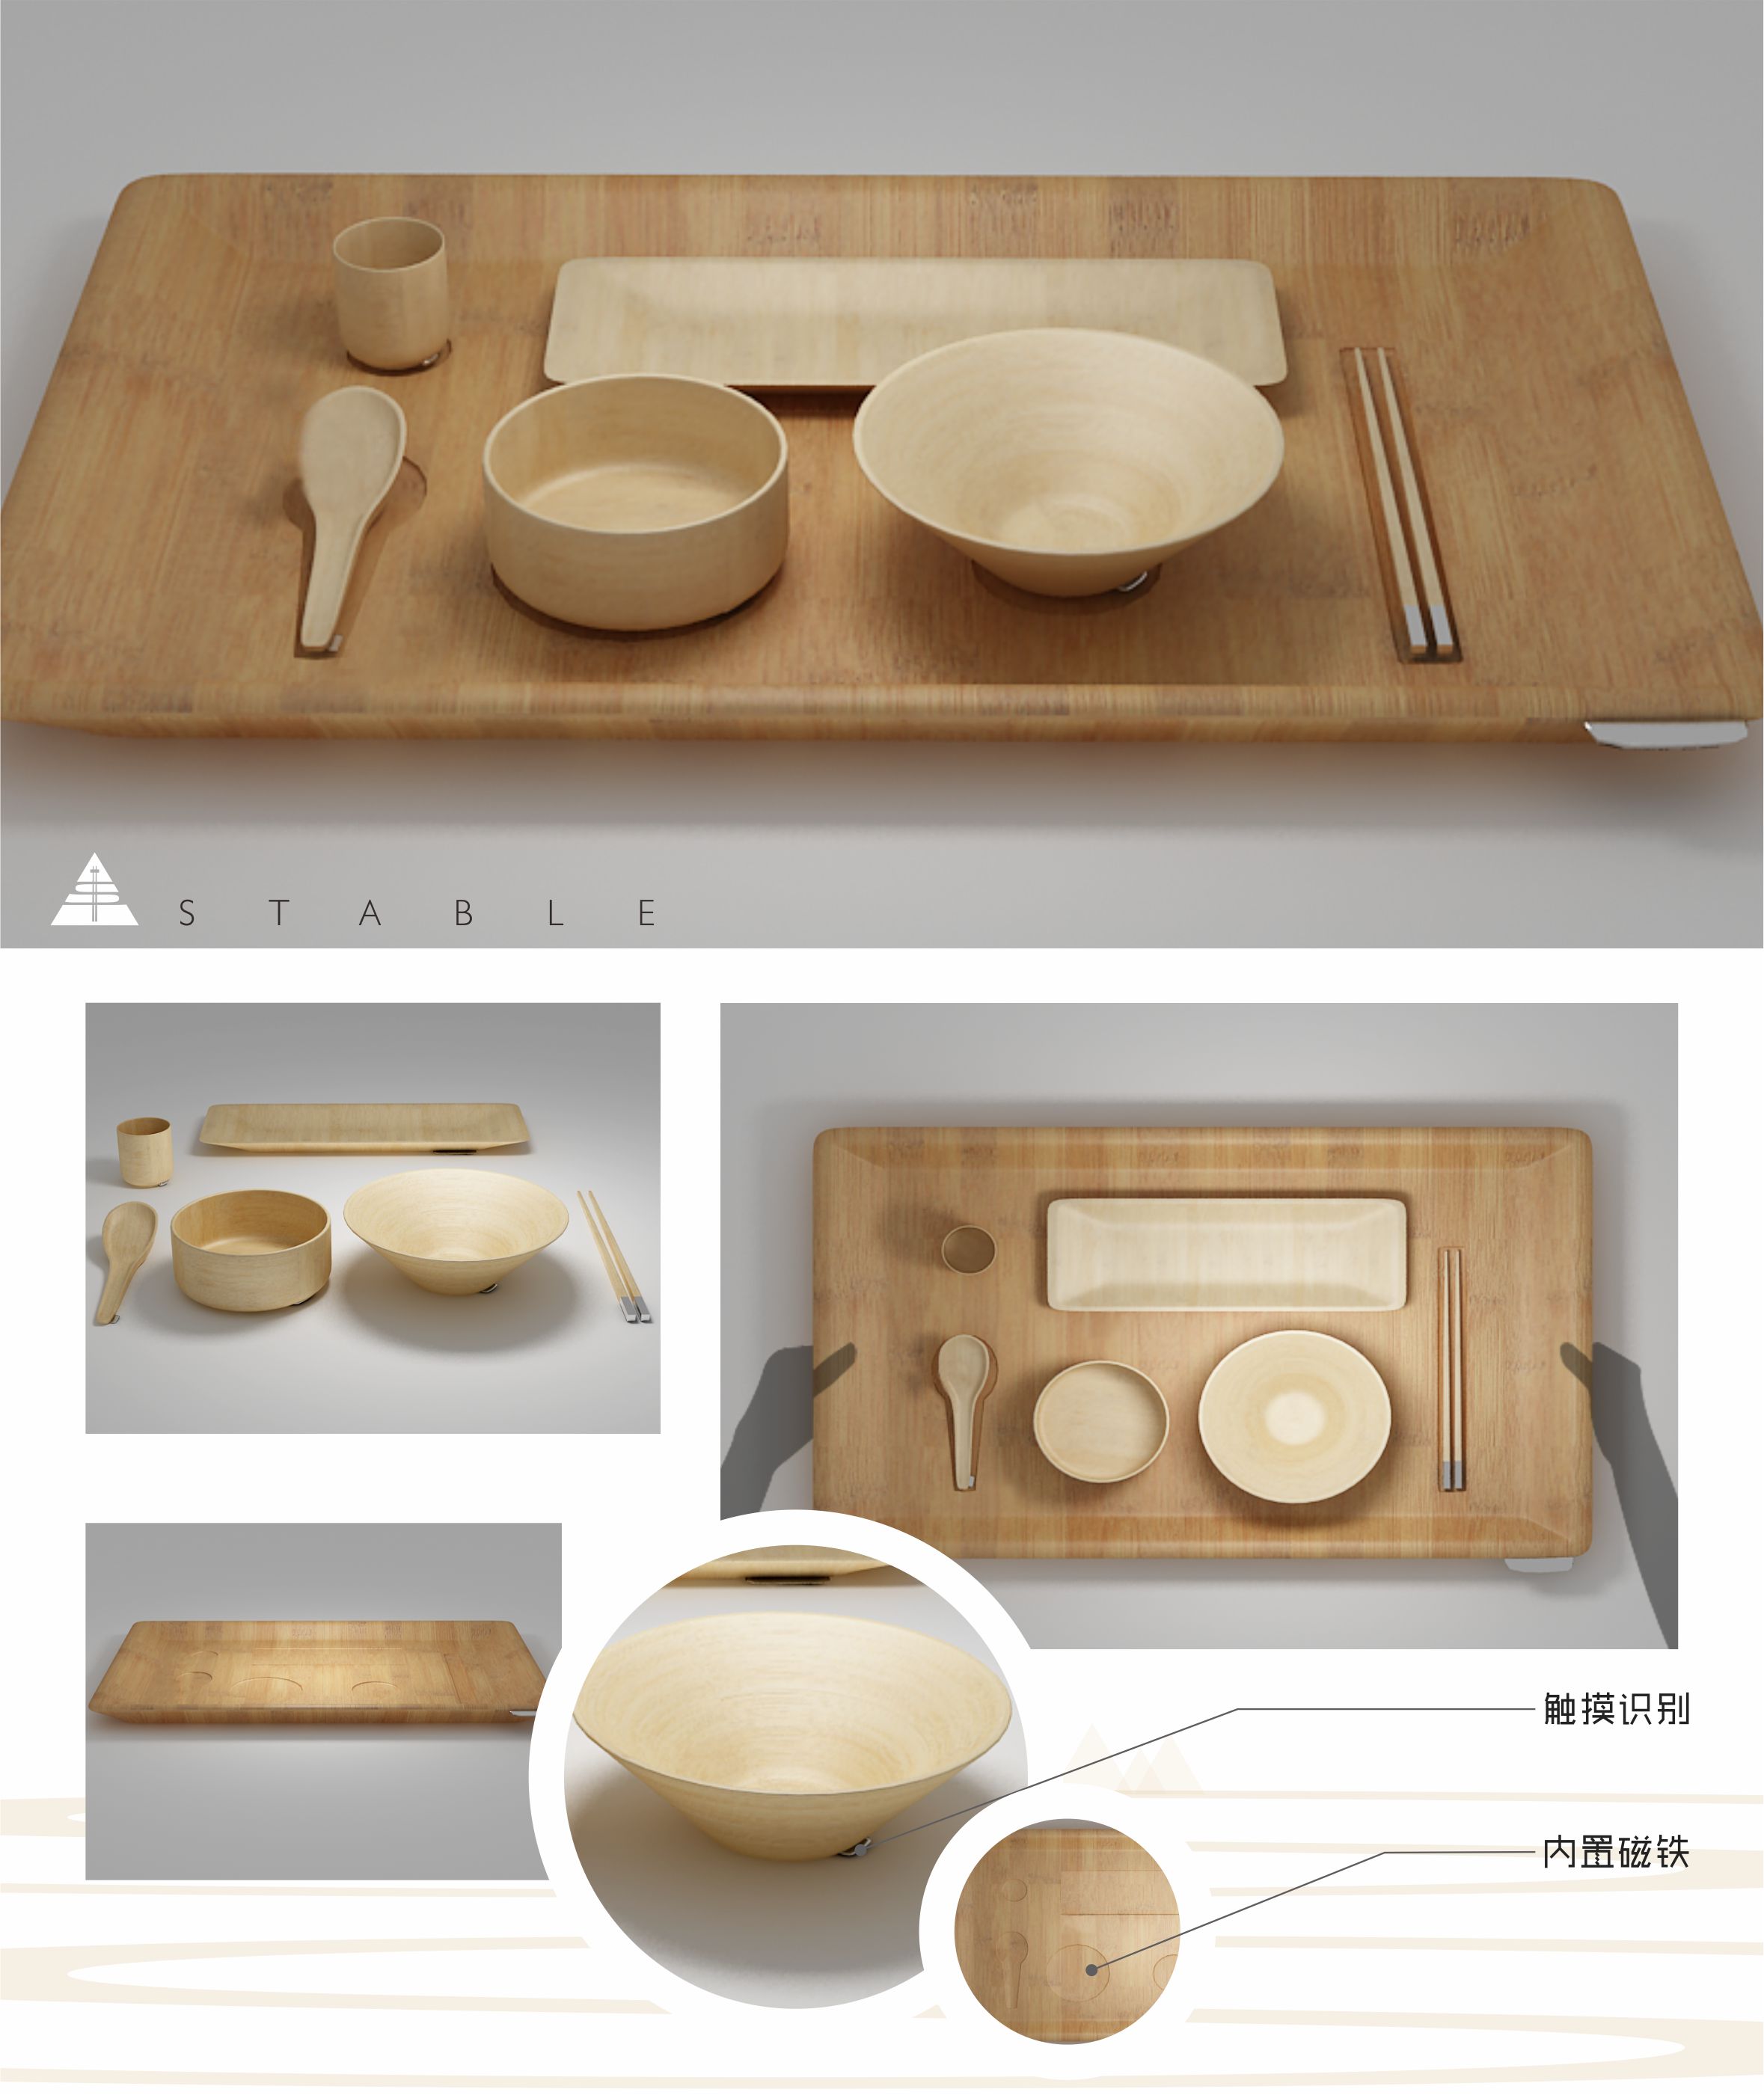 "stable"餐具产品视觉形象设计